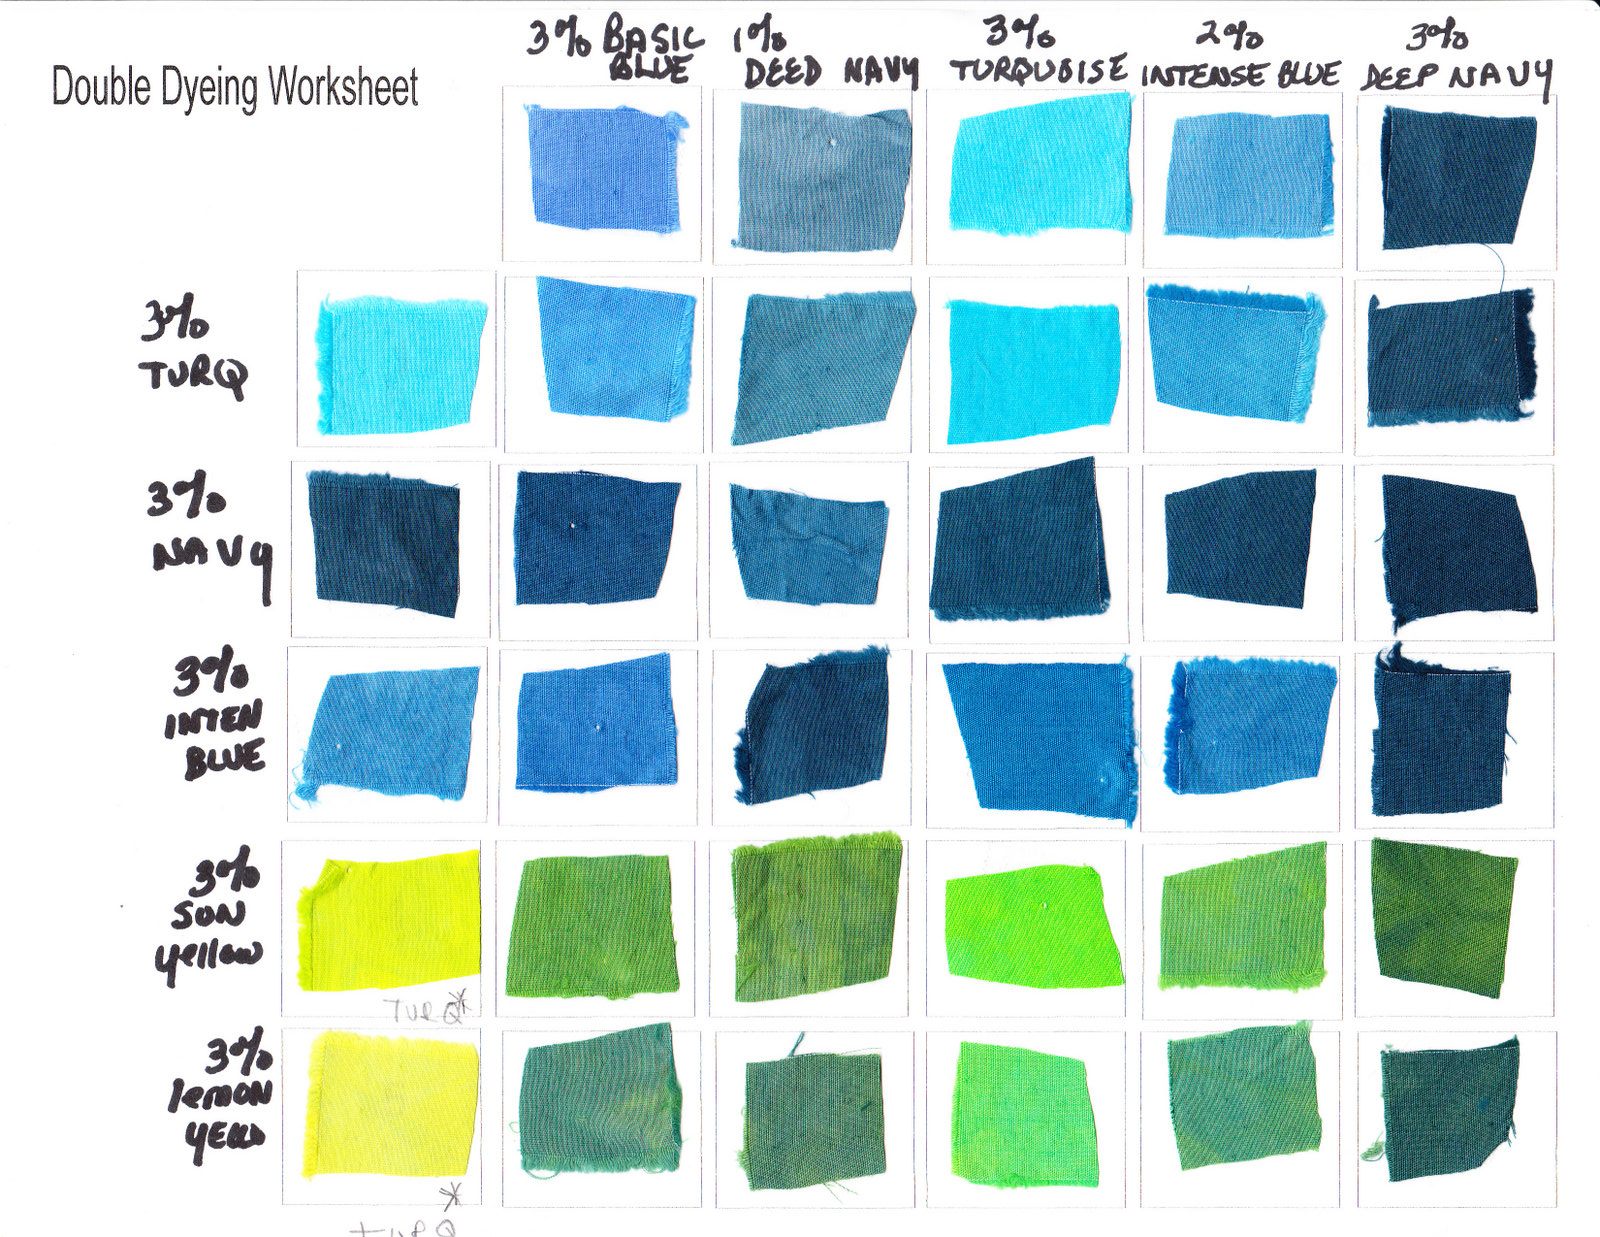 Beth's Blog: The Newly Dyed Fabrics - Part II